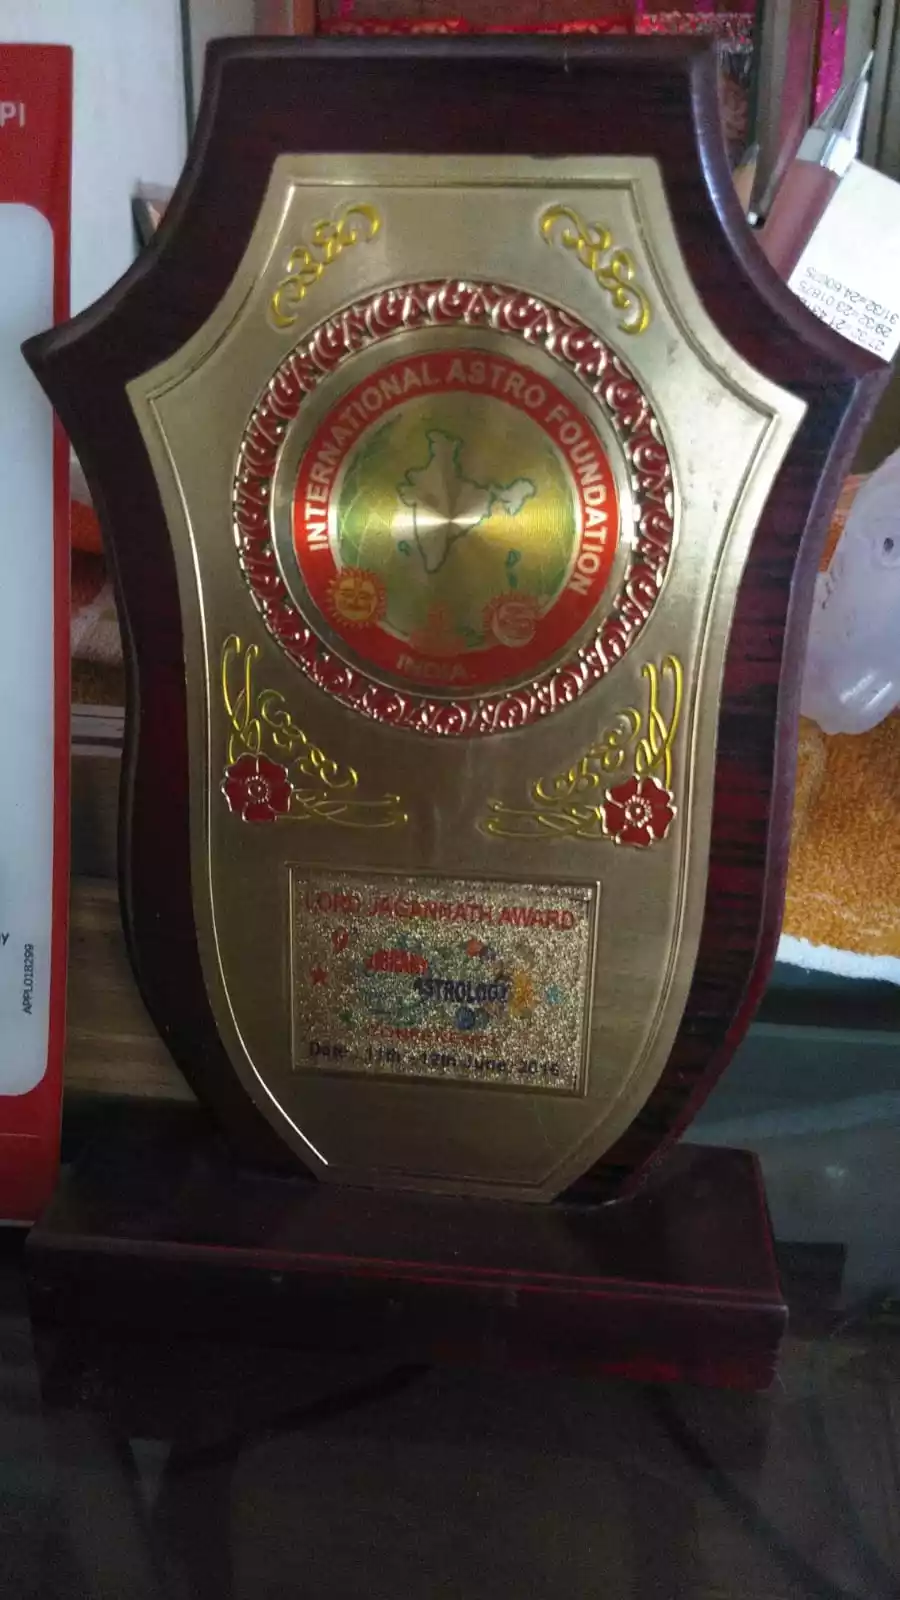  Lord Jagannath Award